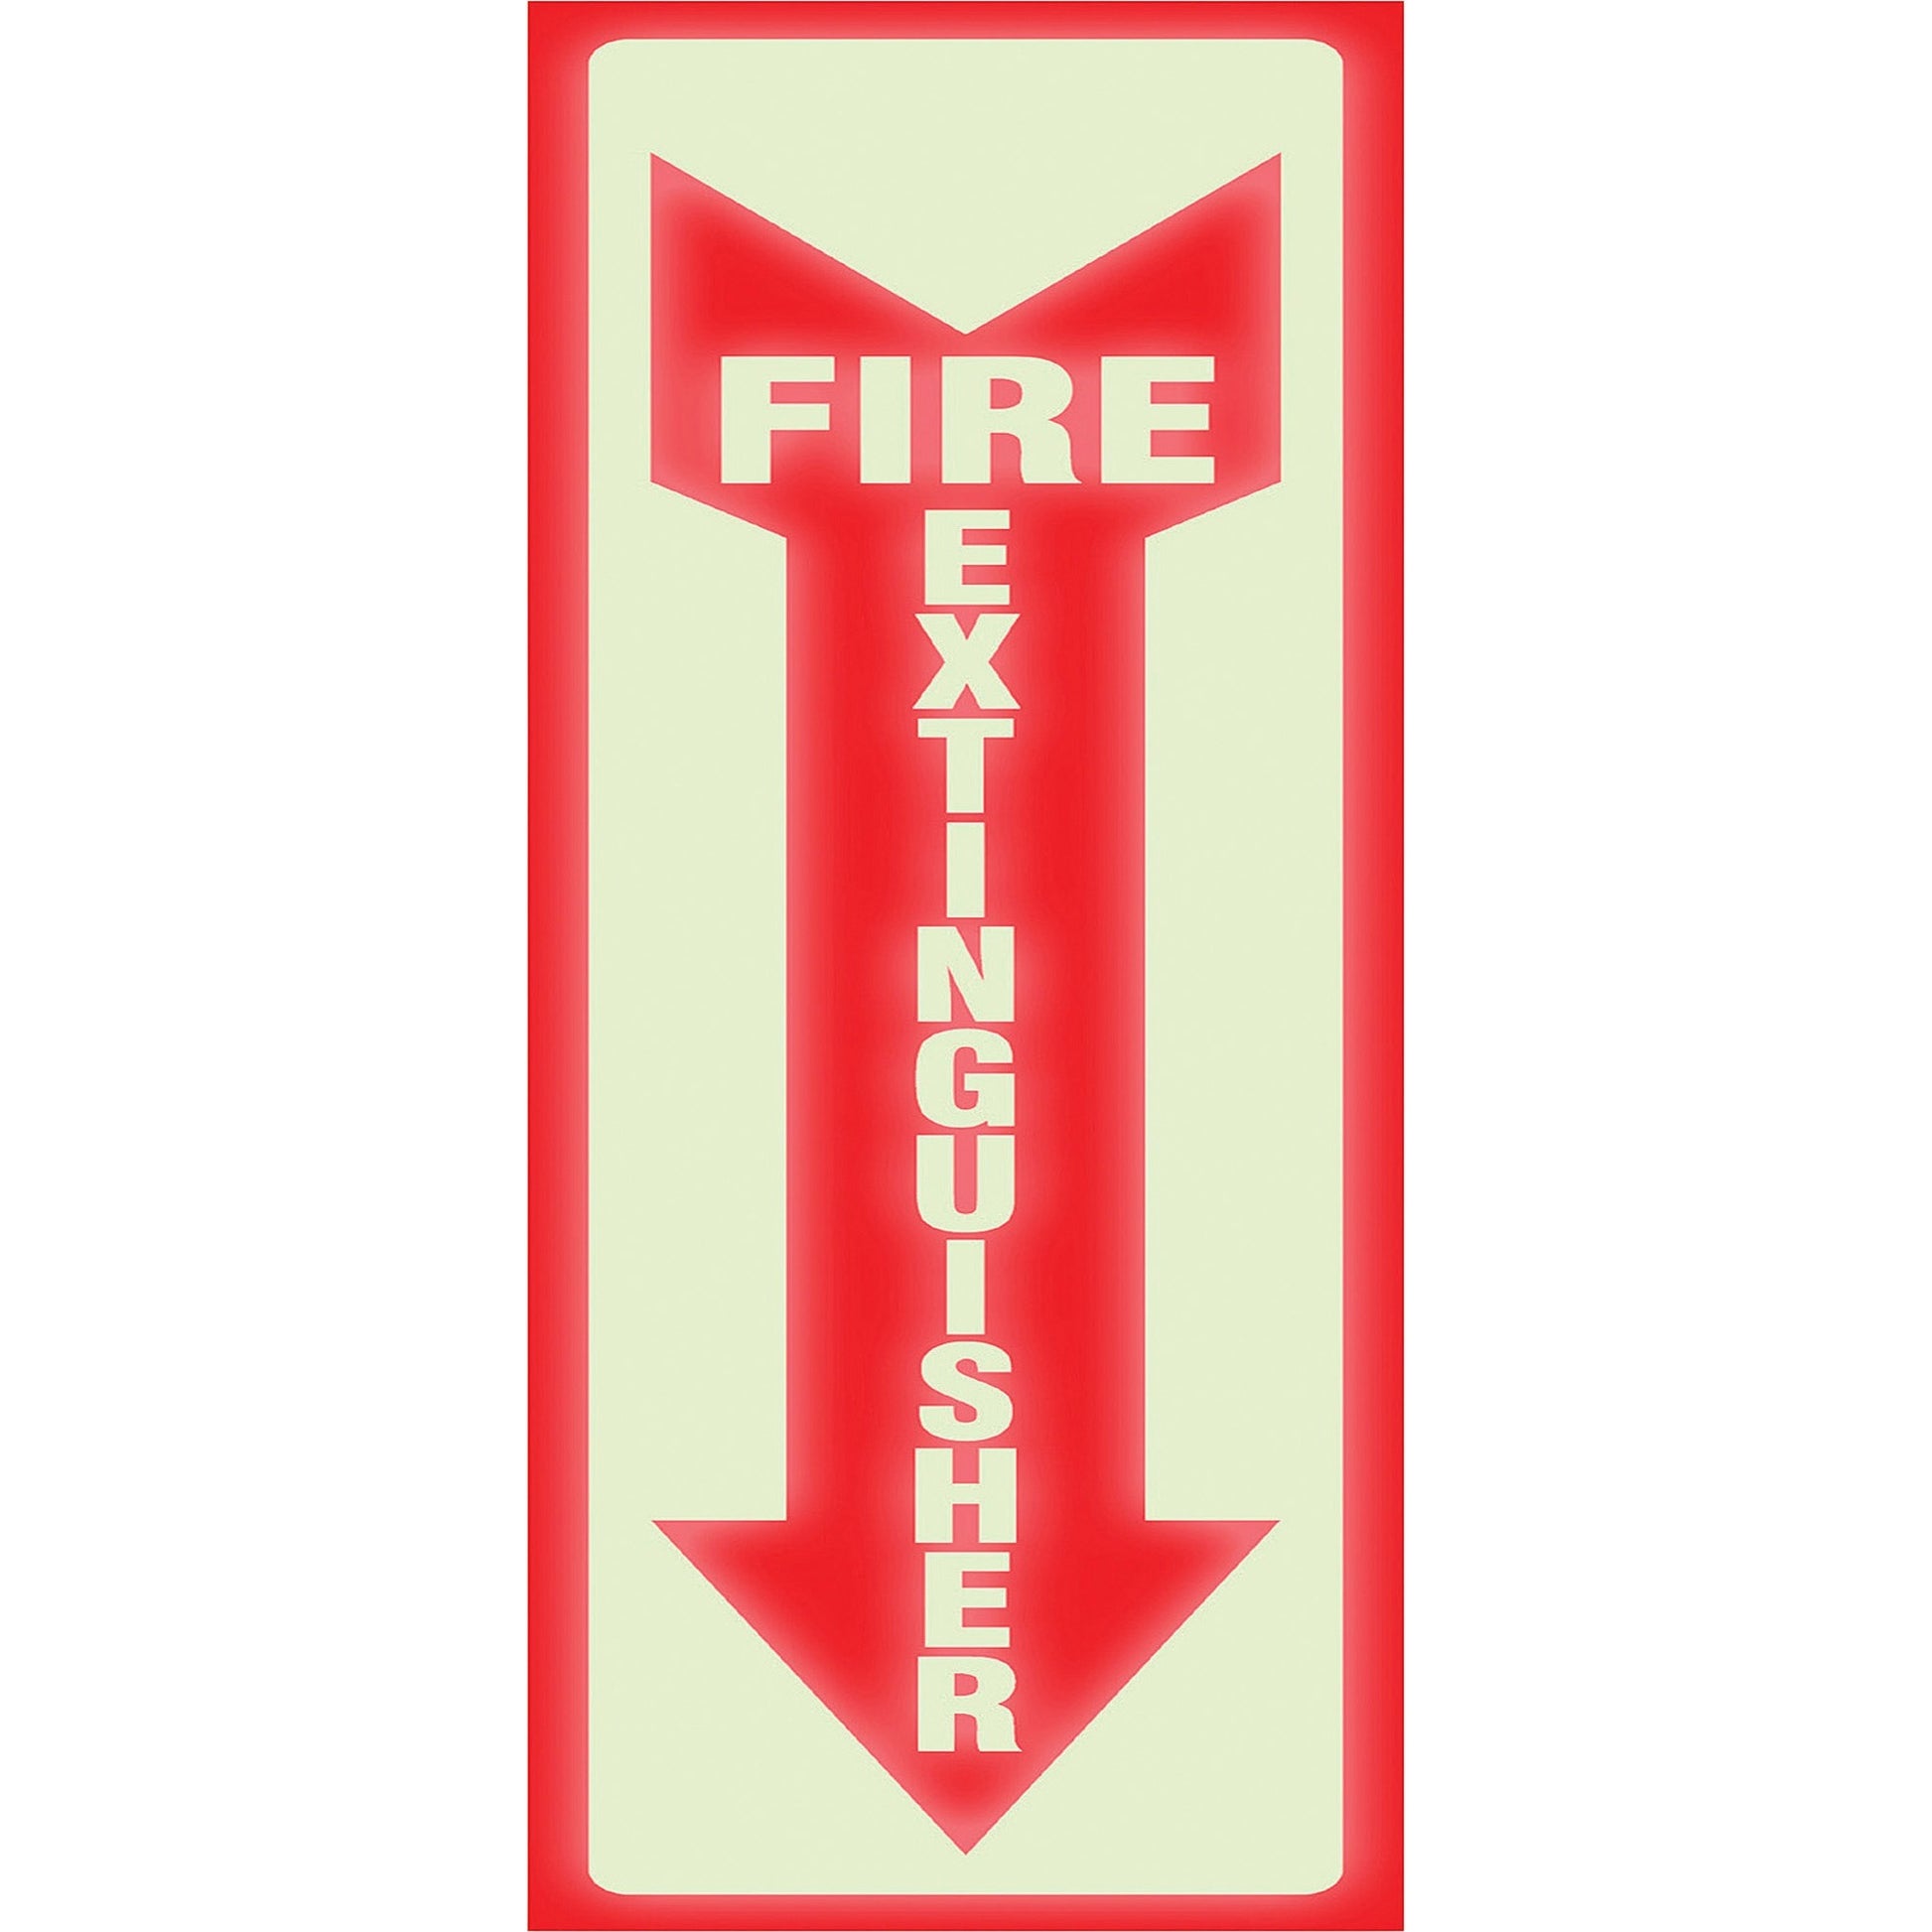 HeadLine Glow Fire Extinguisher Sign